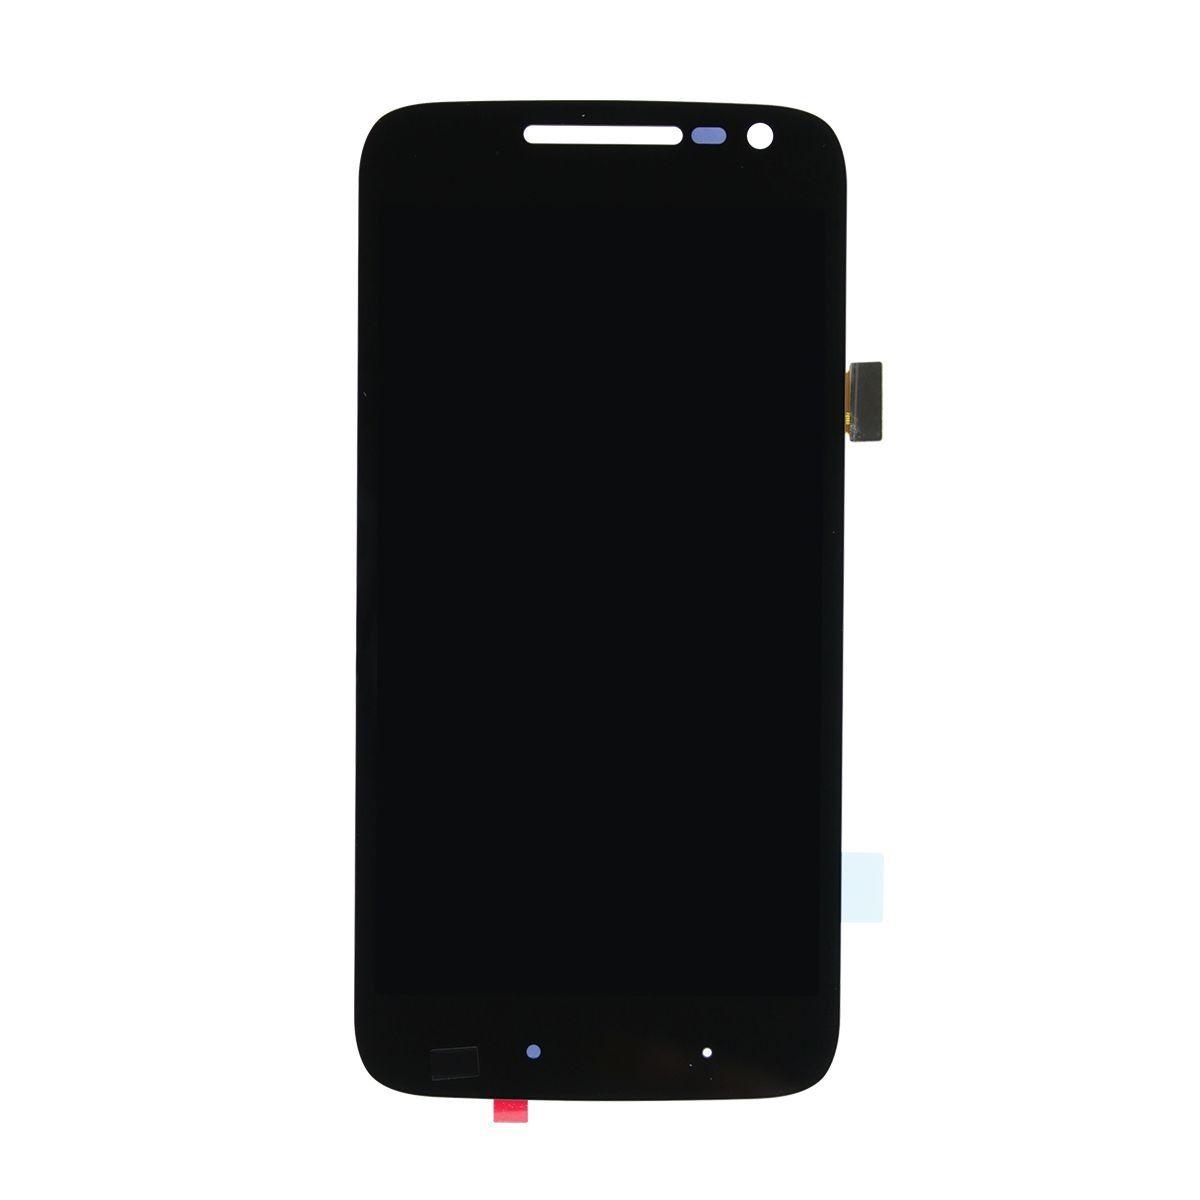 LCD + touch screen Motorola Moto G4 play XT1607/XT1064 black